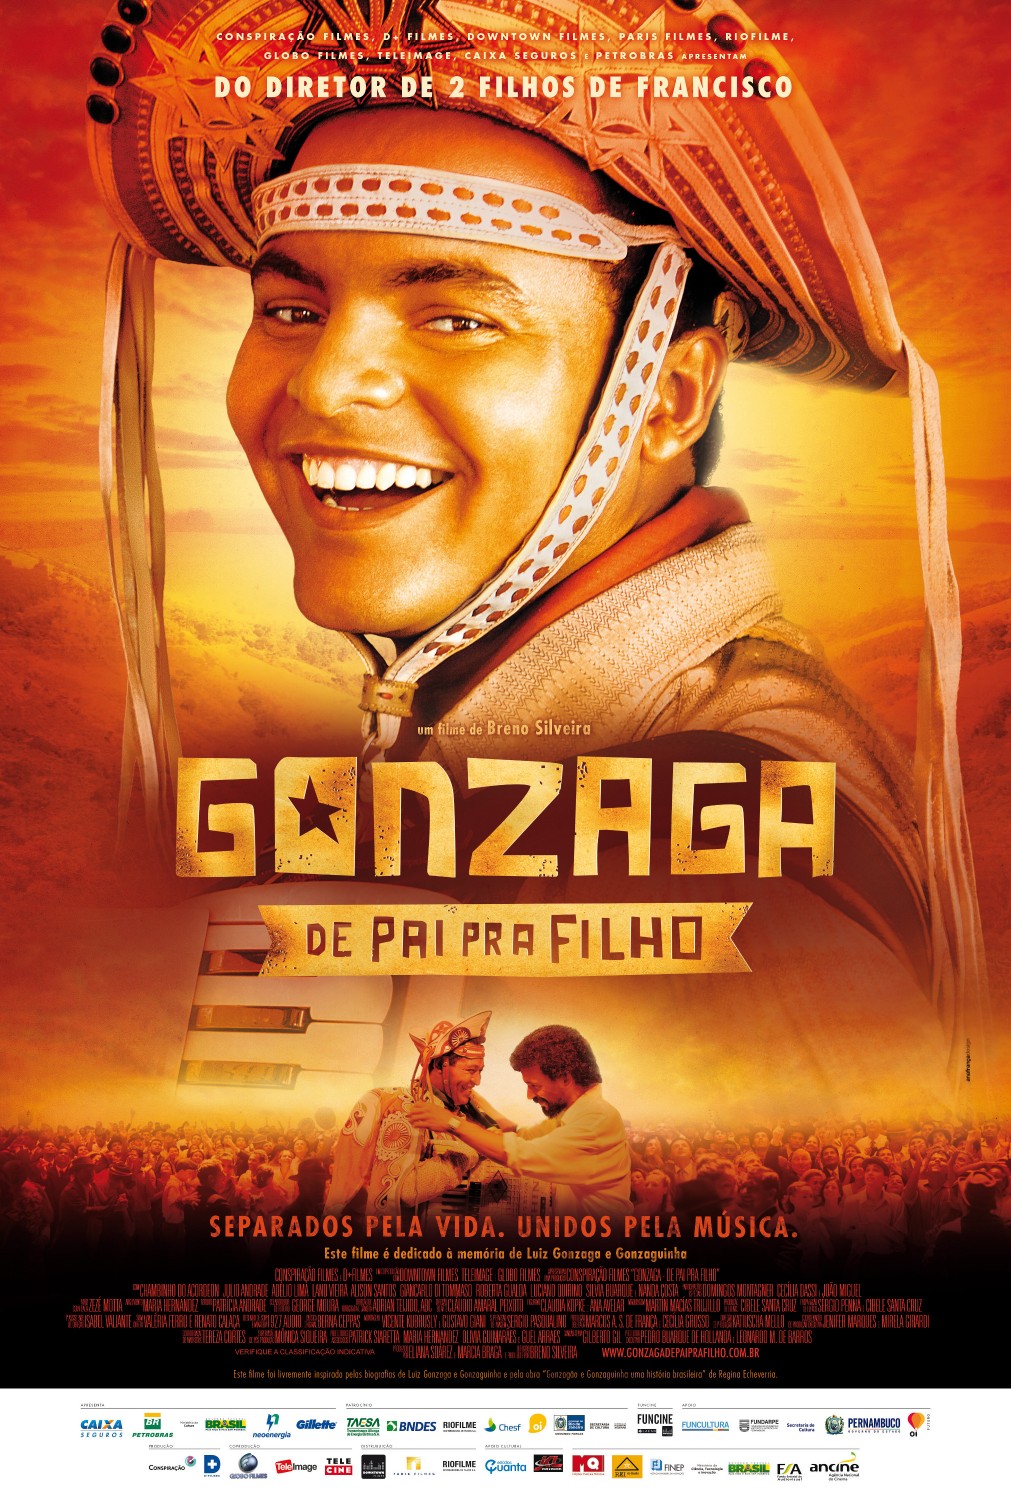 Extra Large Movie Poster Image for Gonzaga: De Pai pra Filho 